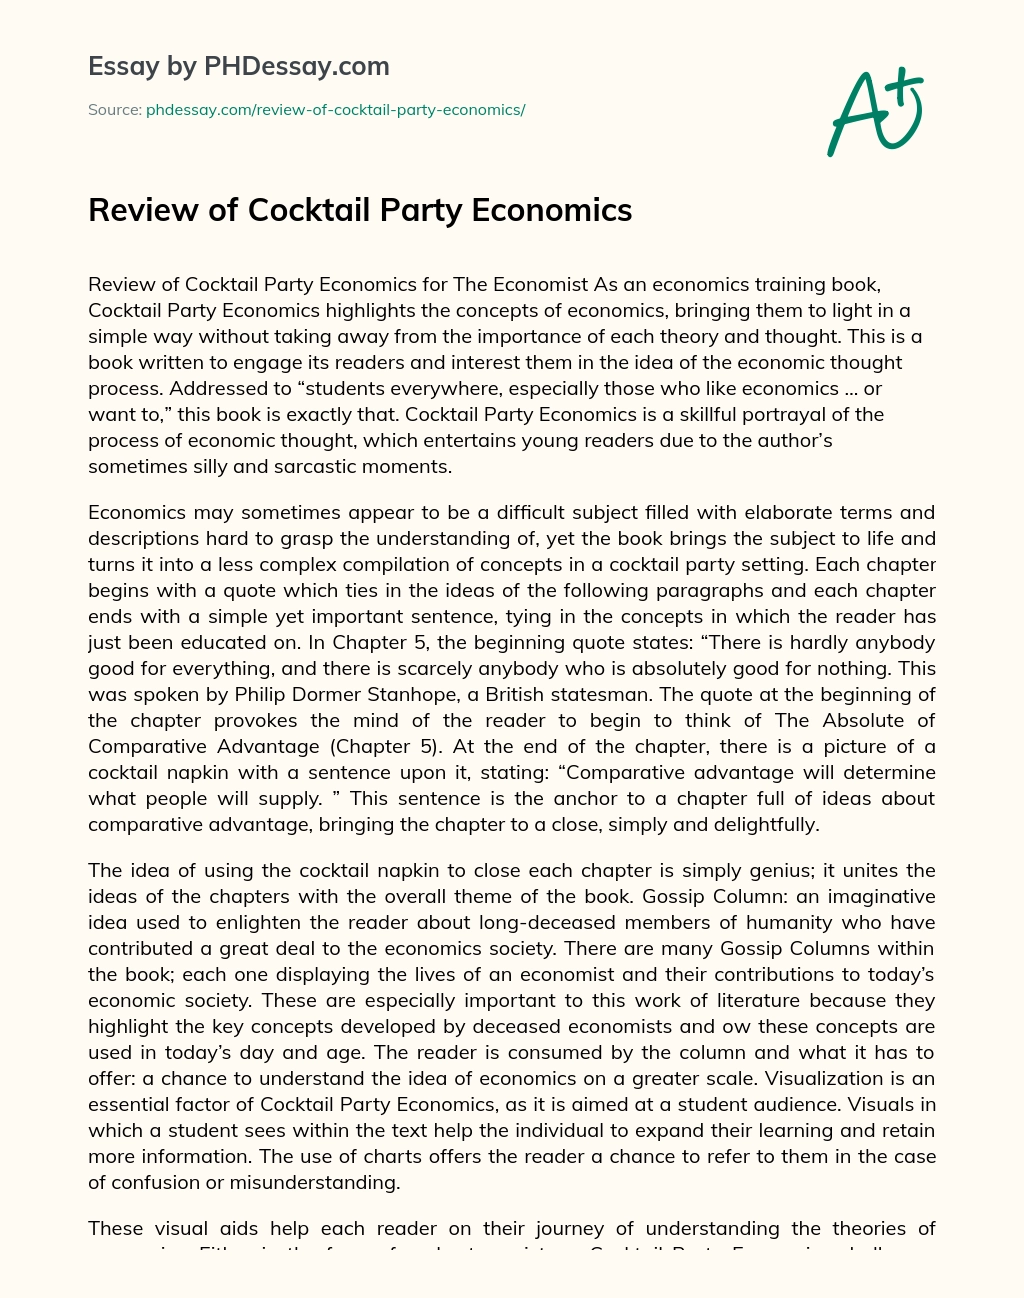 Review of Cocktail Party Economics essay